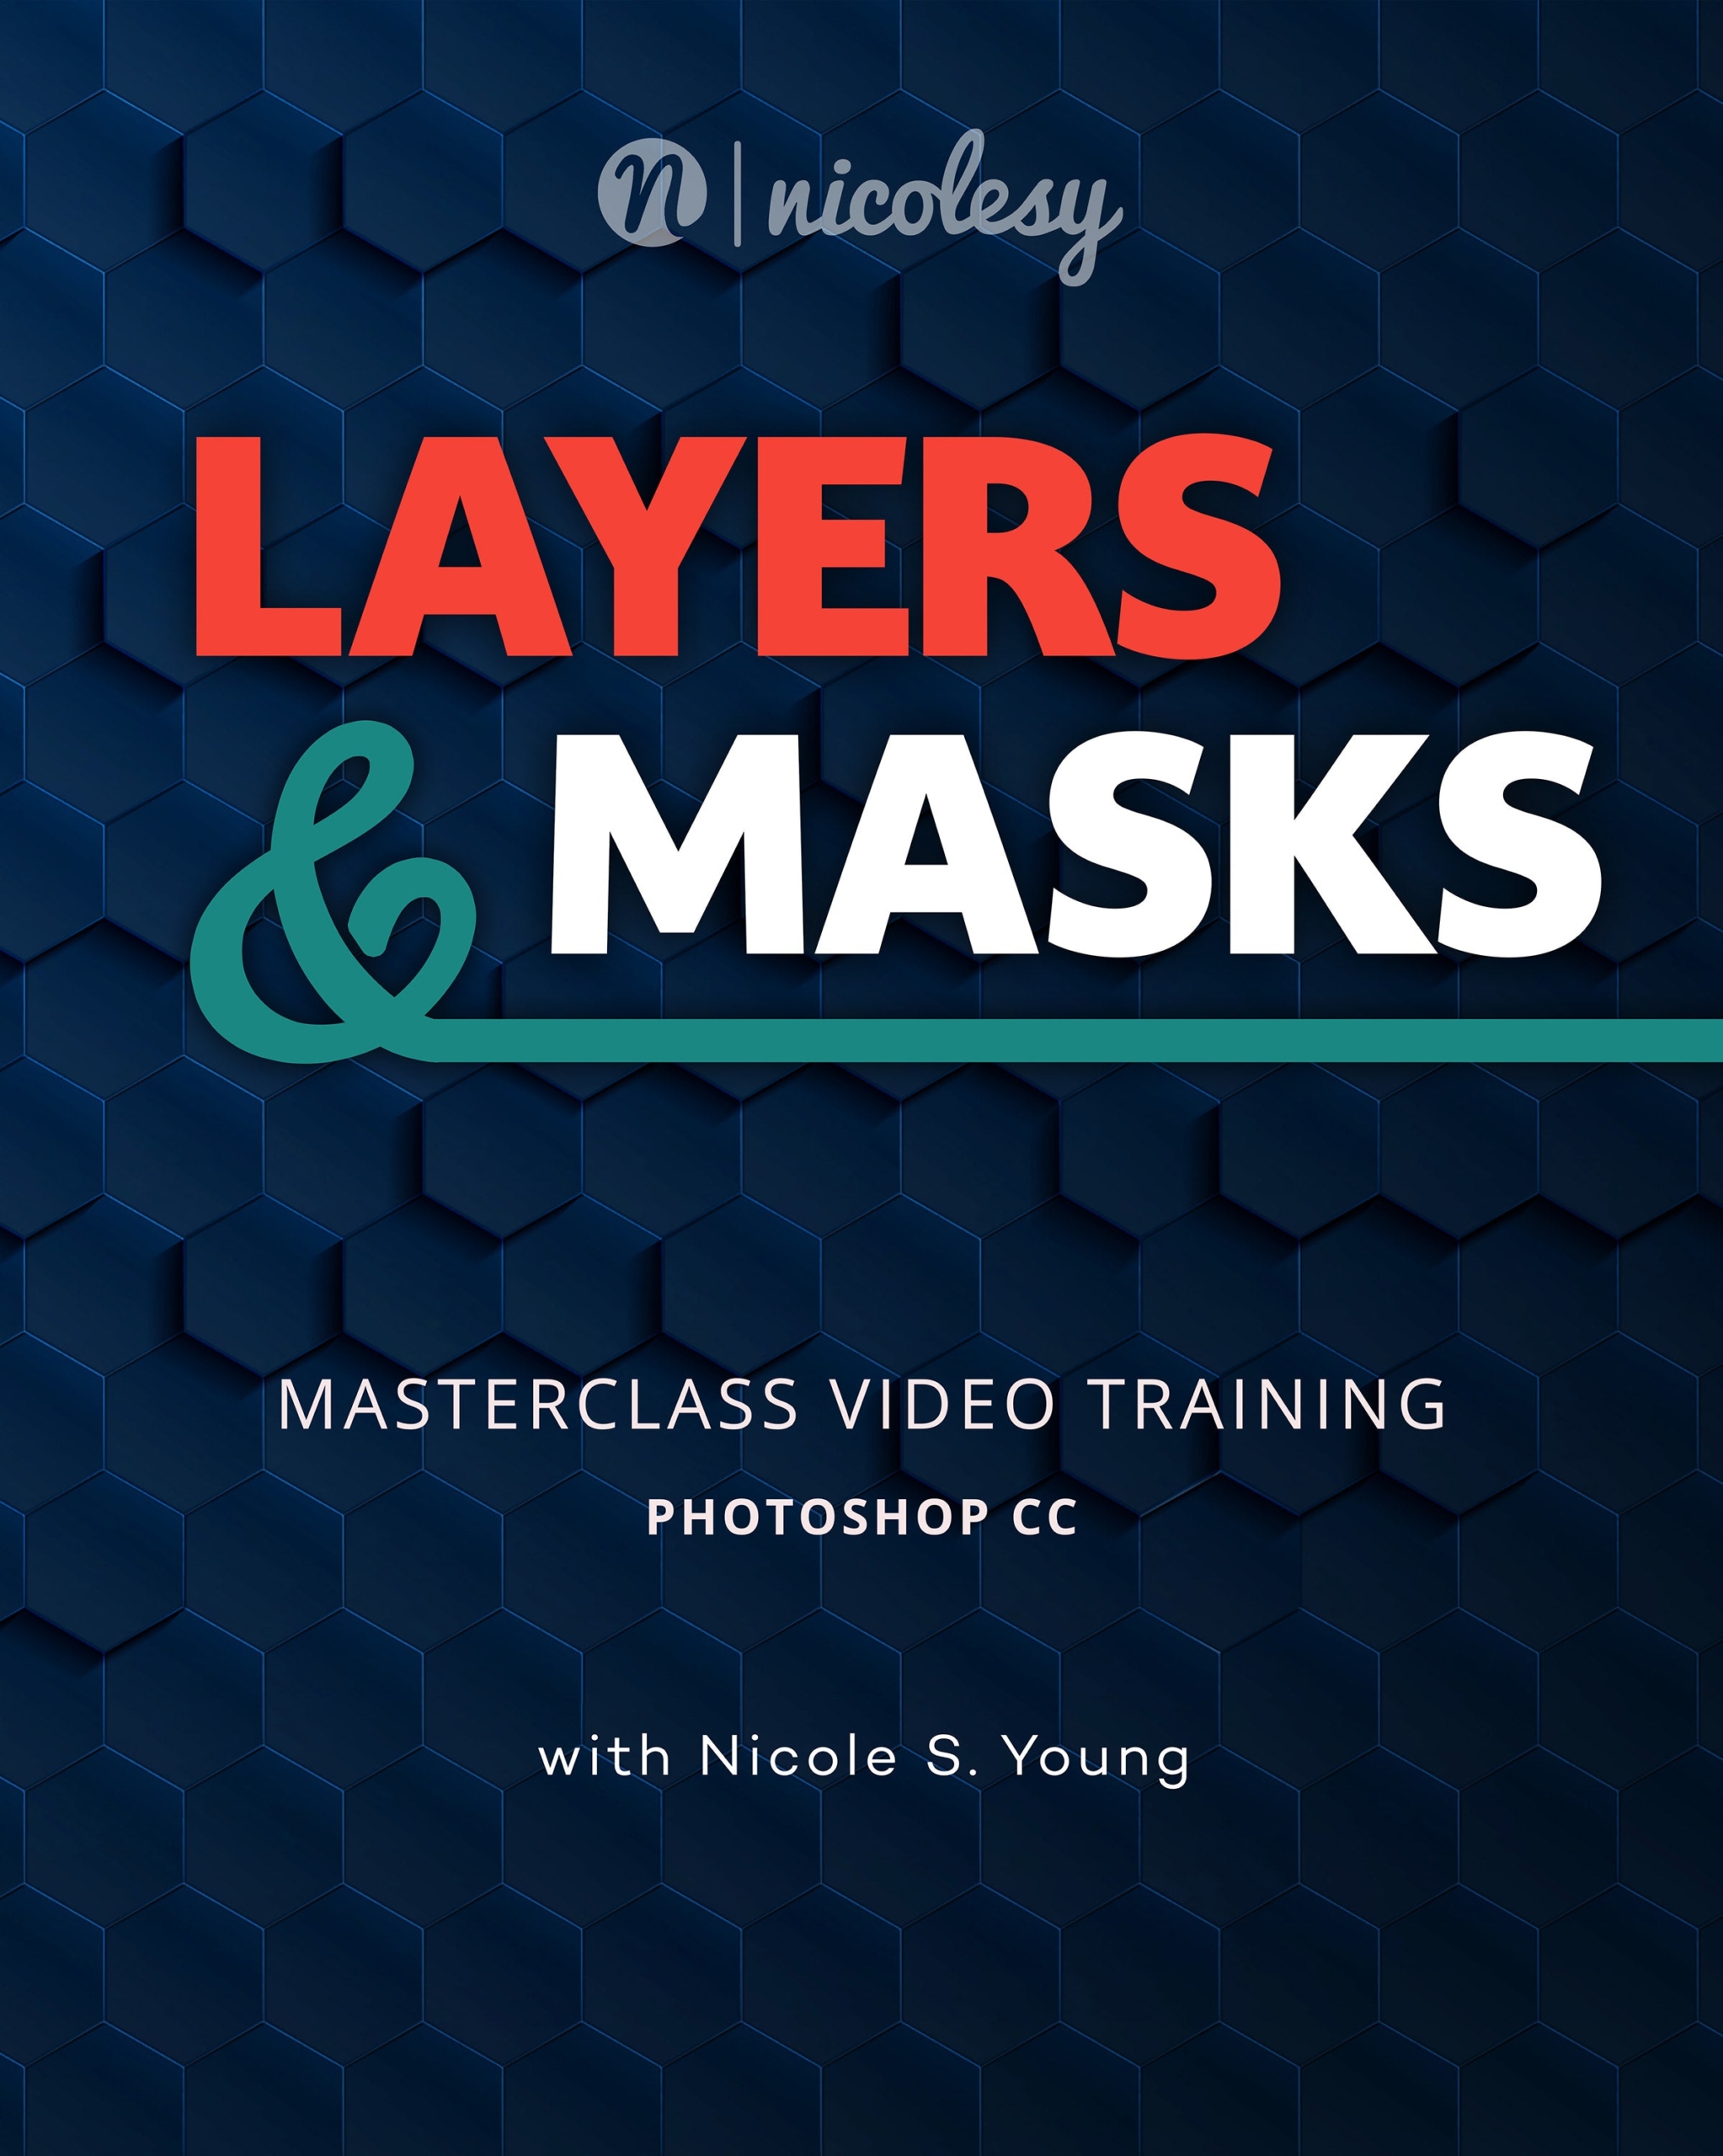 Adobe Photoshop Selection and Masking Master Course